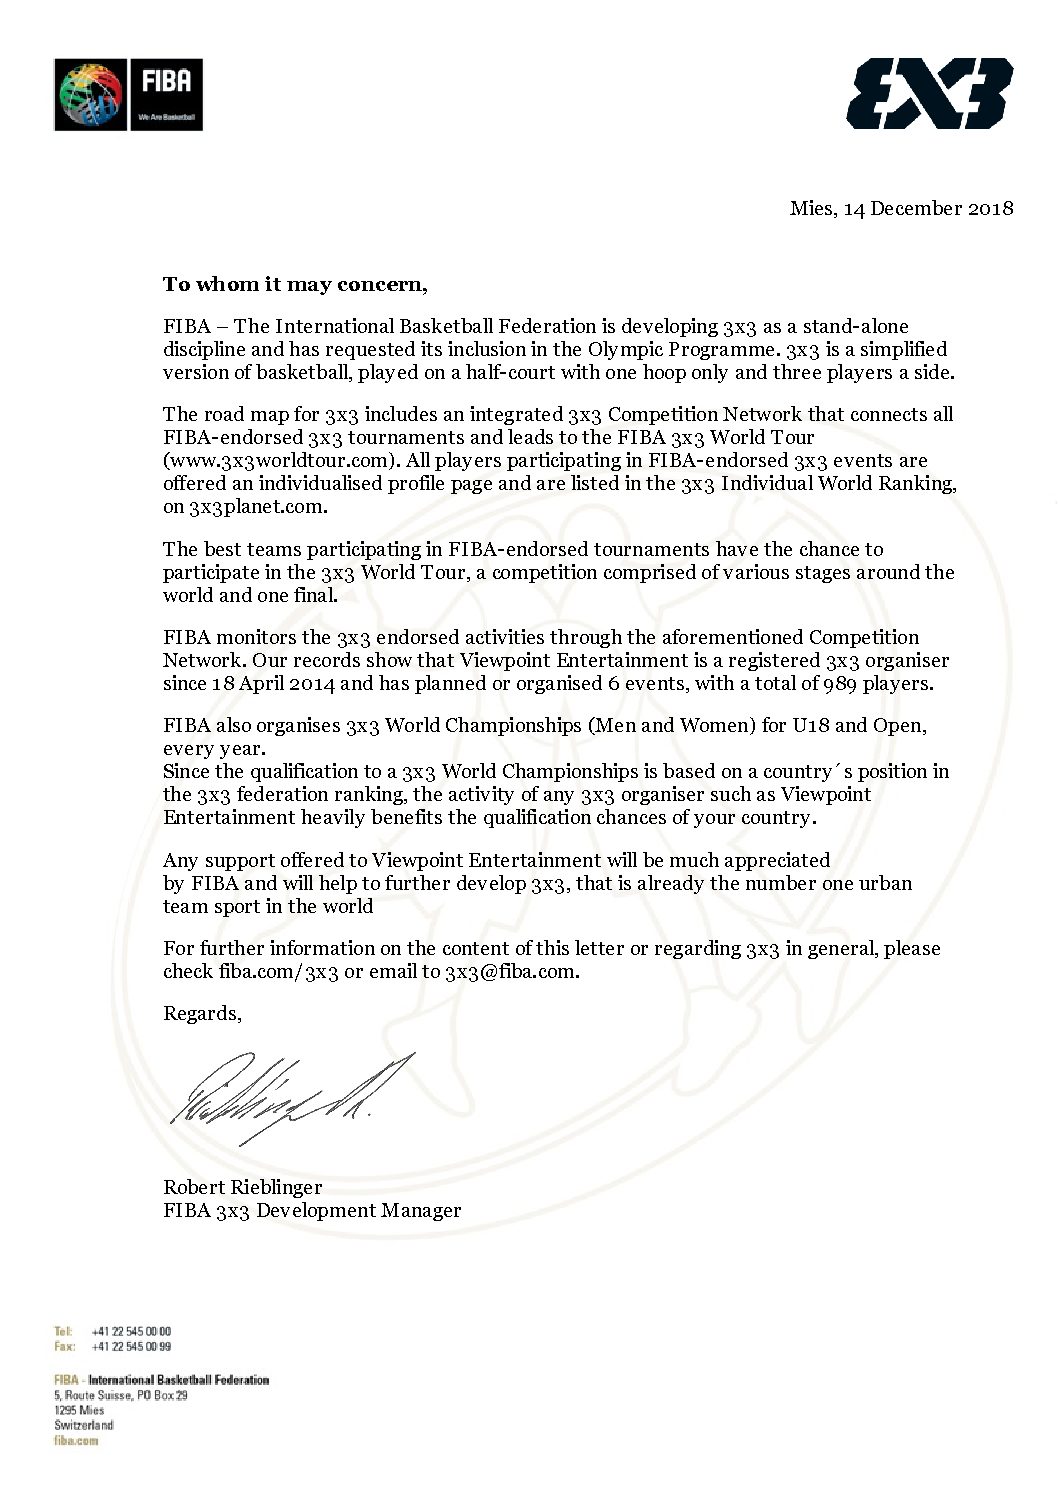 FIBA Support Letter